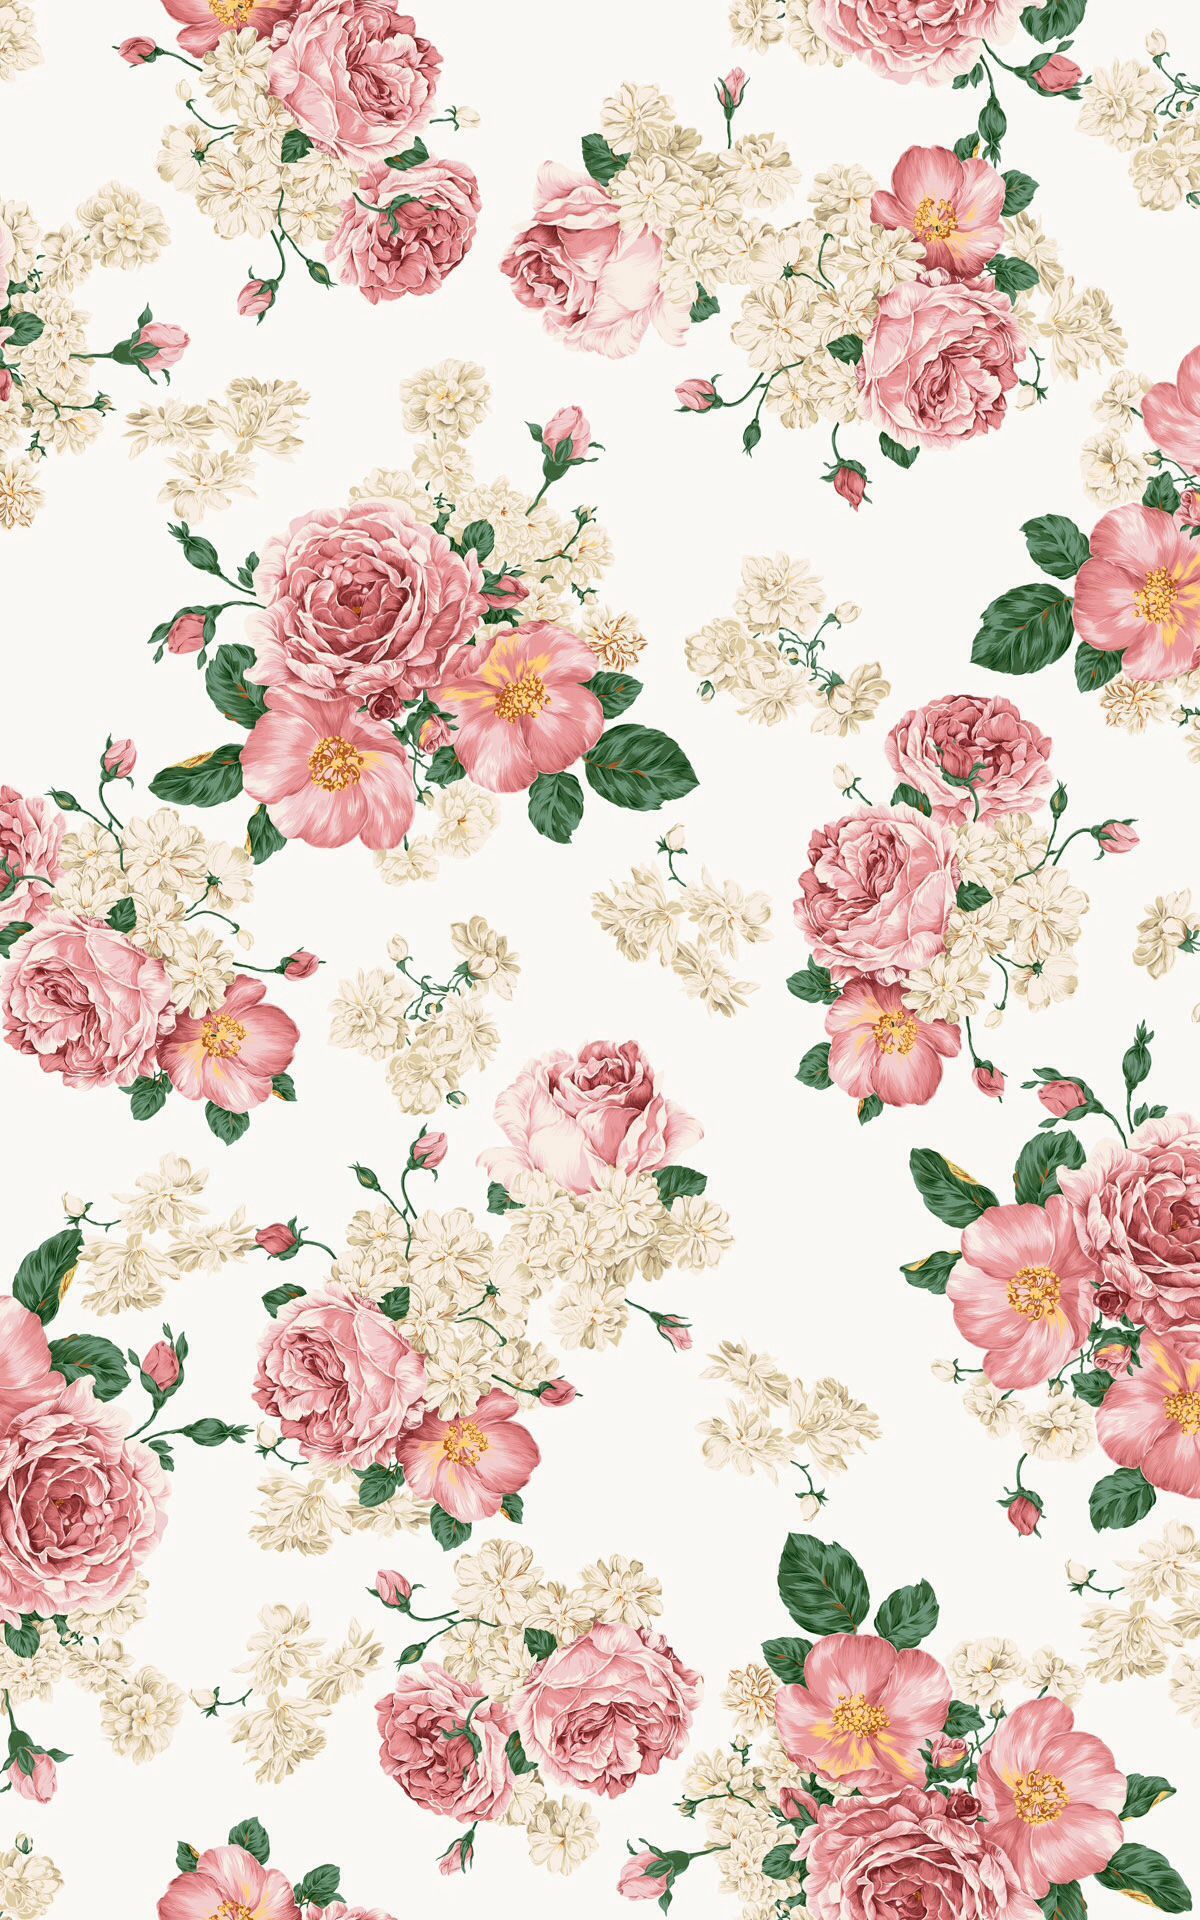 iphonewallpaper. Floral wallpaper iphone, Floral print wallpaper, Flower wallpaper